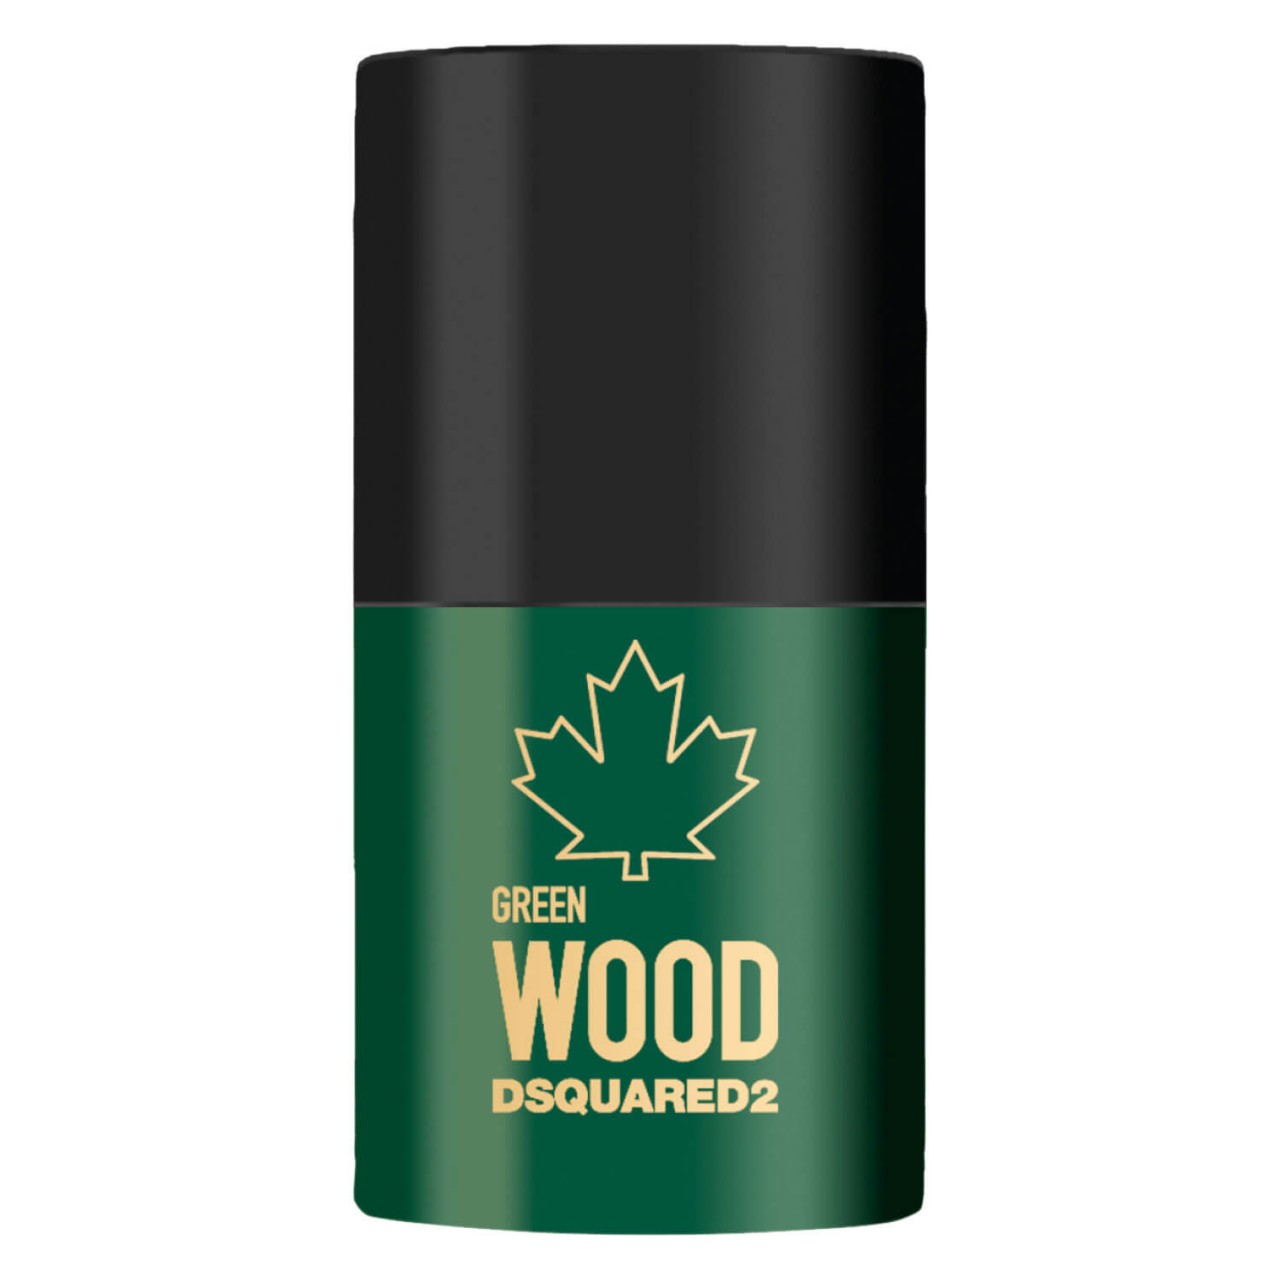 DSQUARED2 WOOD - Green Pour Homme Deodorant Stick von DSQUARED2